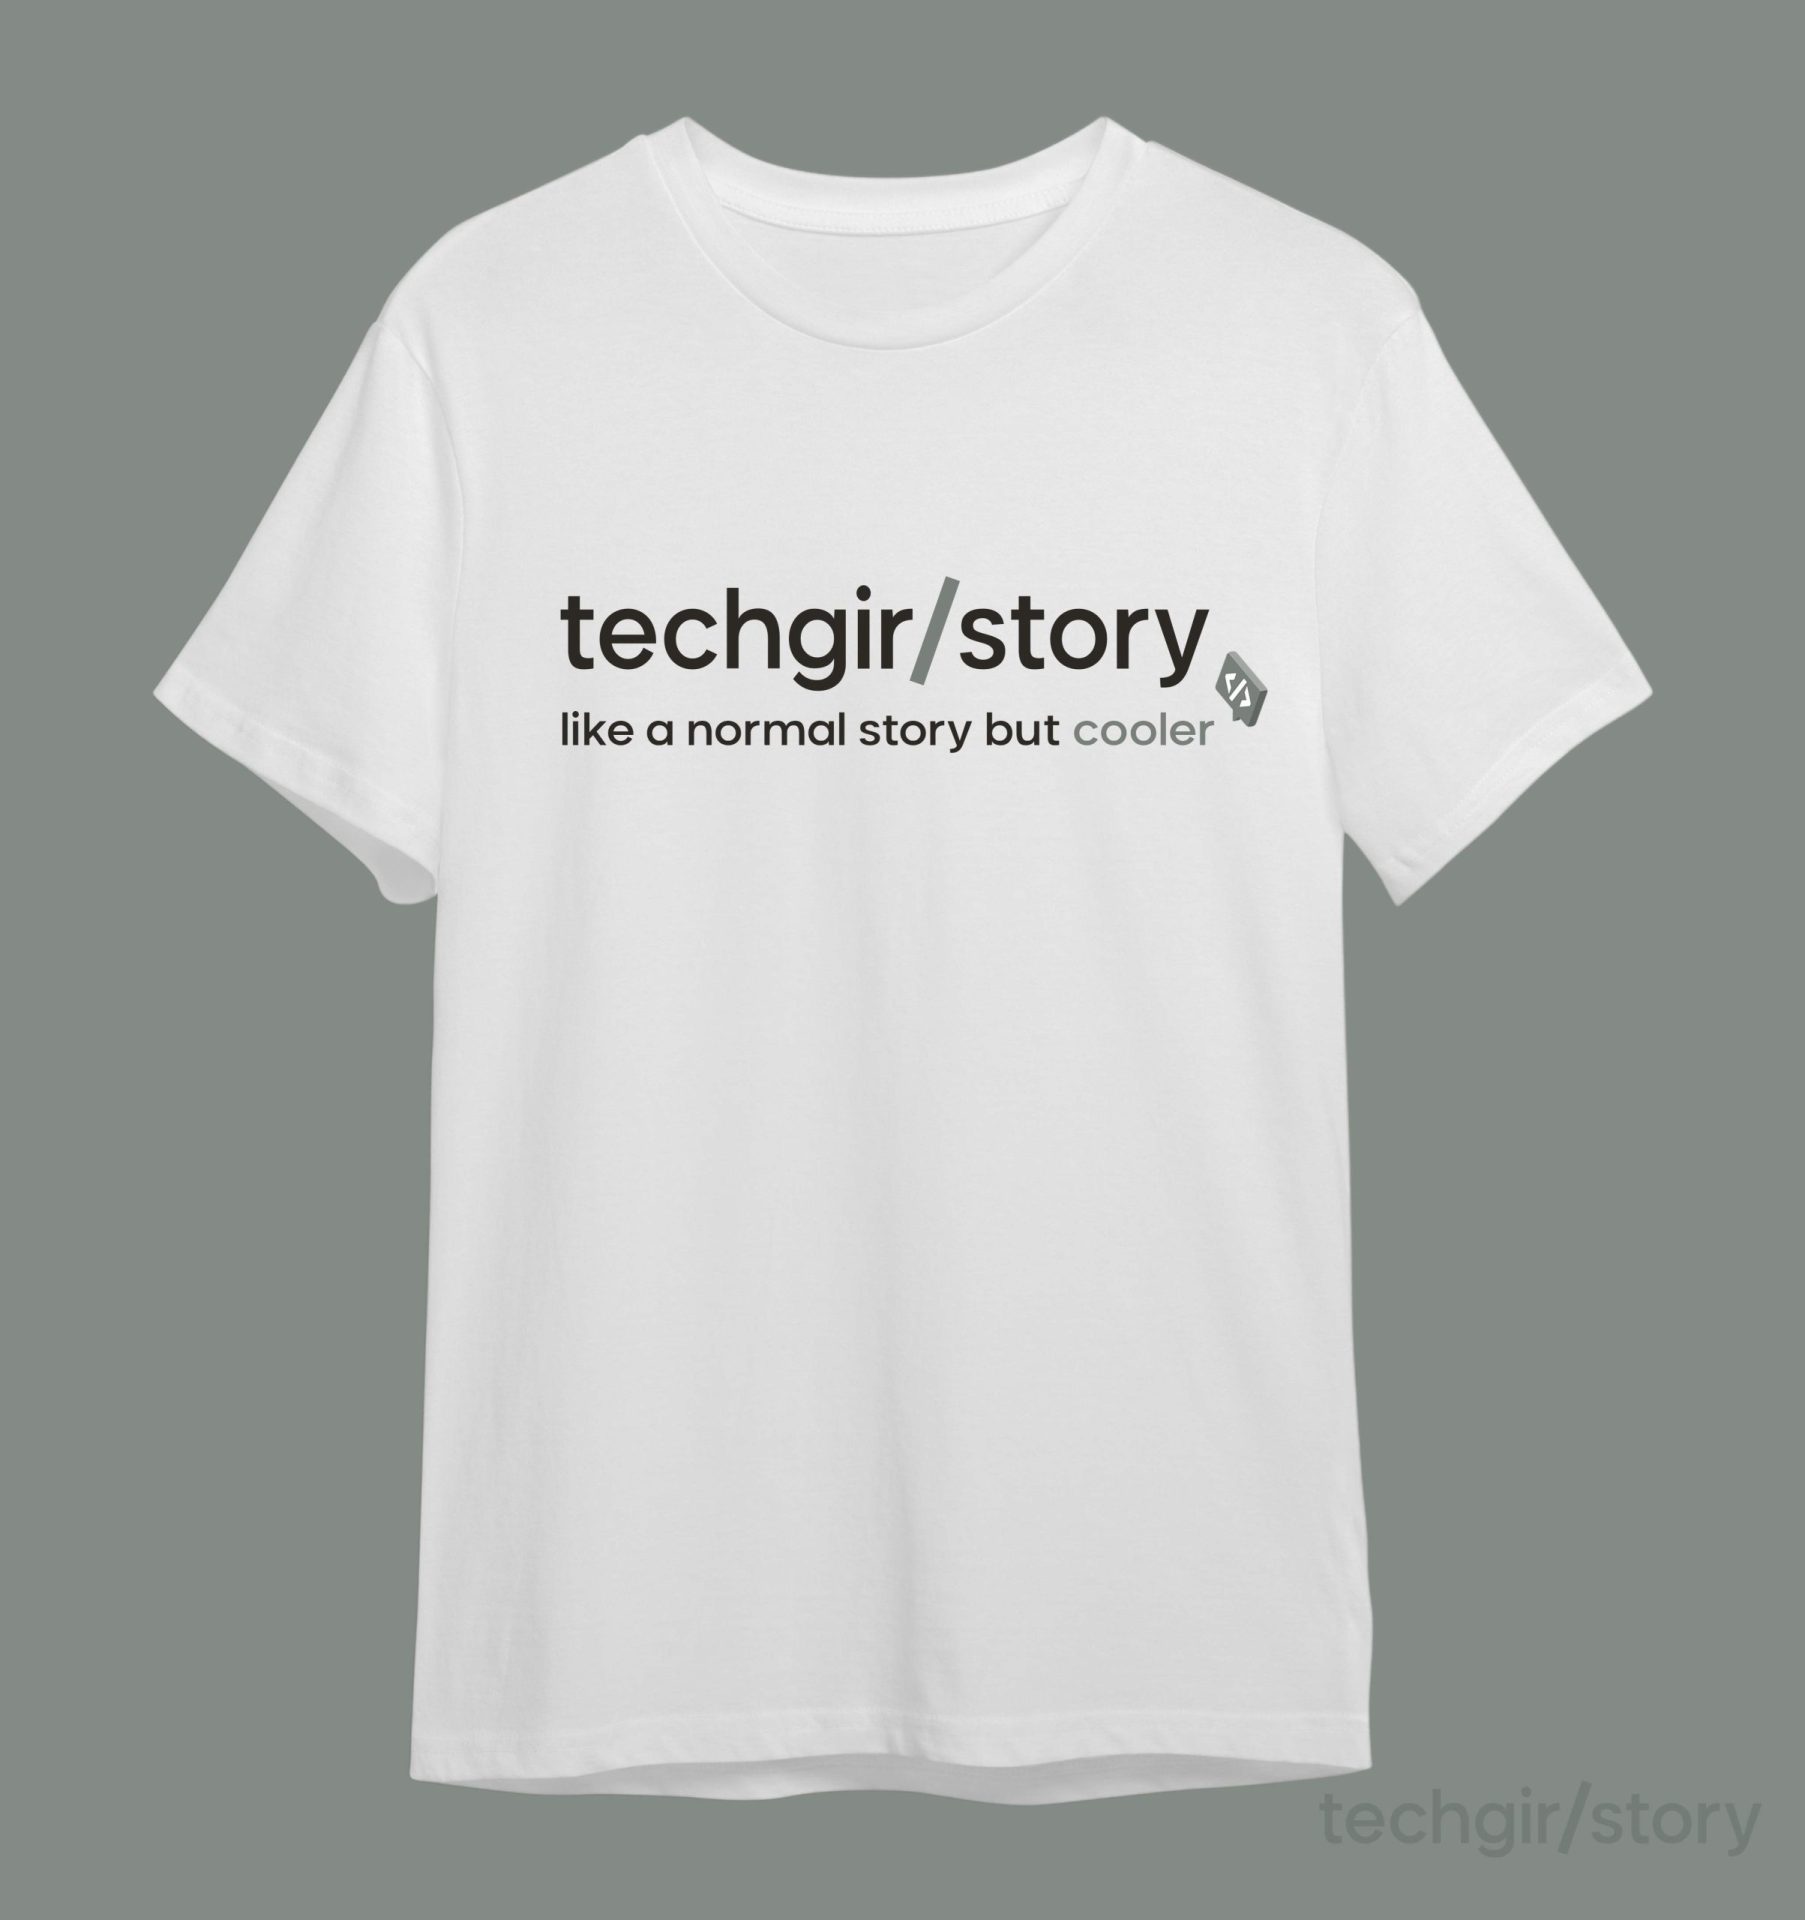 tricou tech girl story cooler programatori software developer freelancer coding